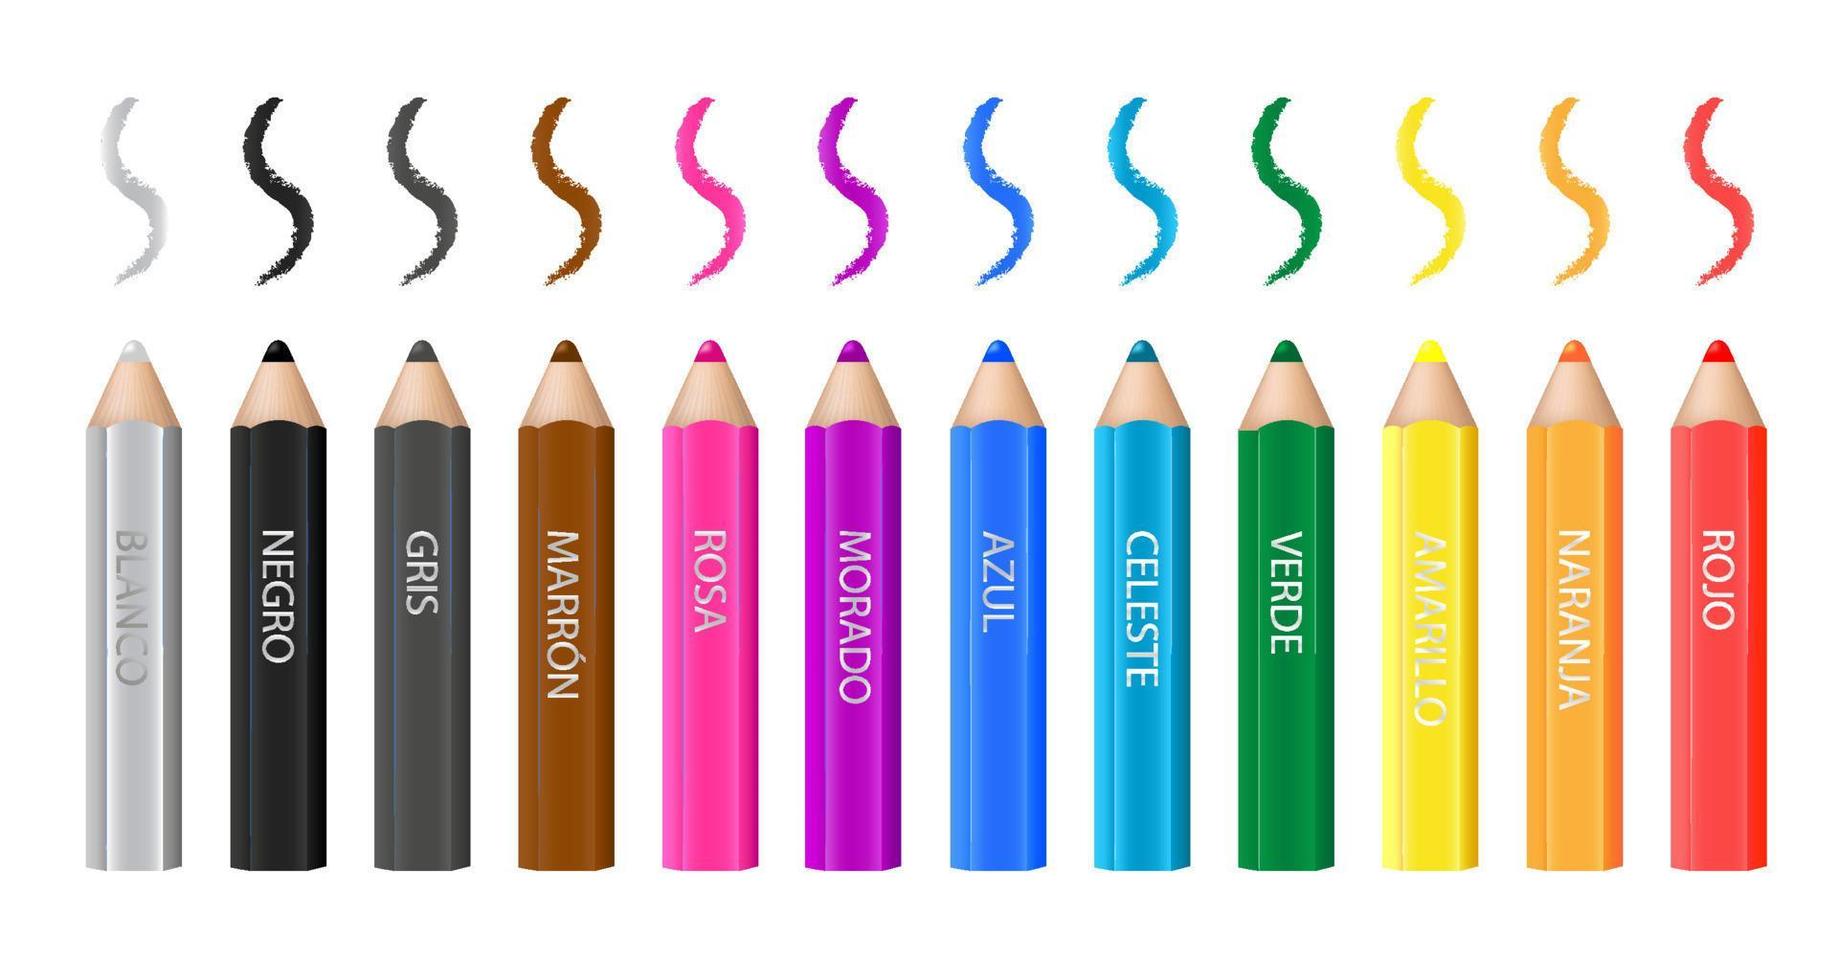 12 crayons et traits en bois multicolores. fond blanc. noms de couleurs en espagnol - rojo, naranja, amarillo, verde, celeste, azul, morado, rosa, marron, gris, negro, blanco. conception de vecteur. vecteur